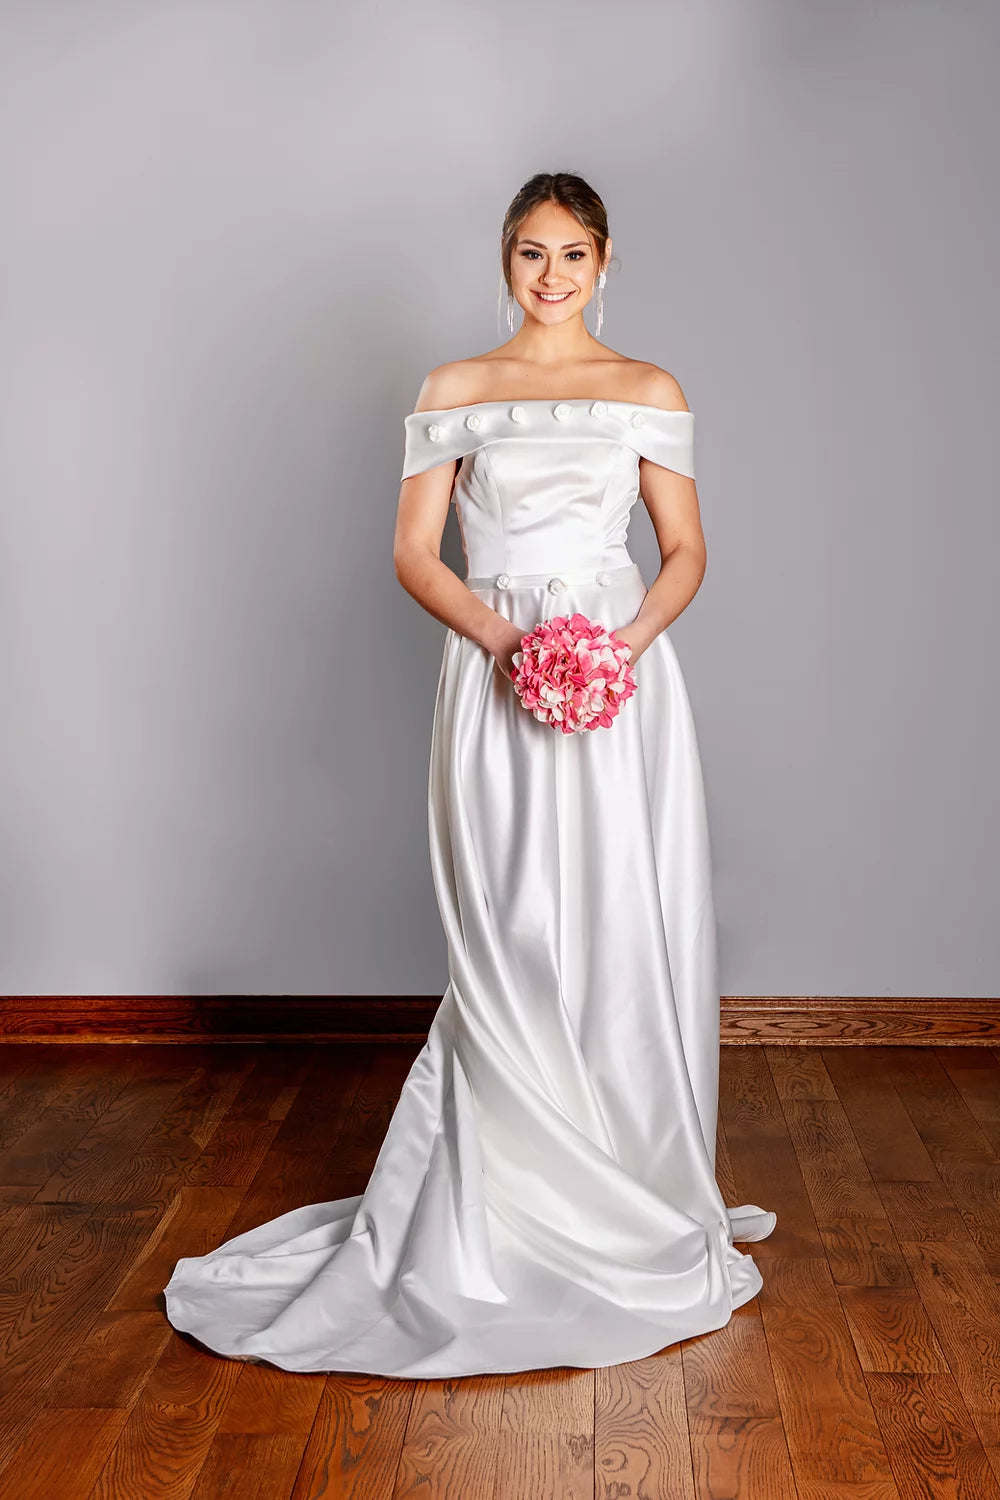 Flowered Wedding Dress